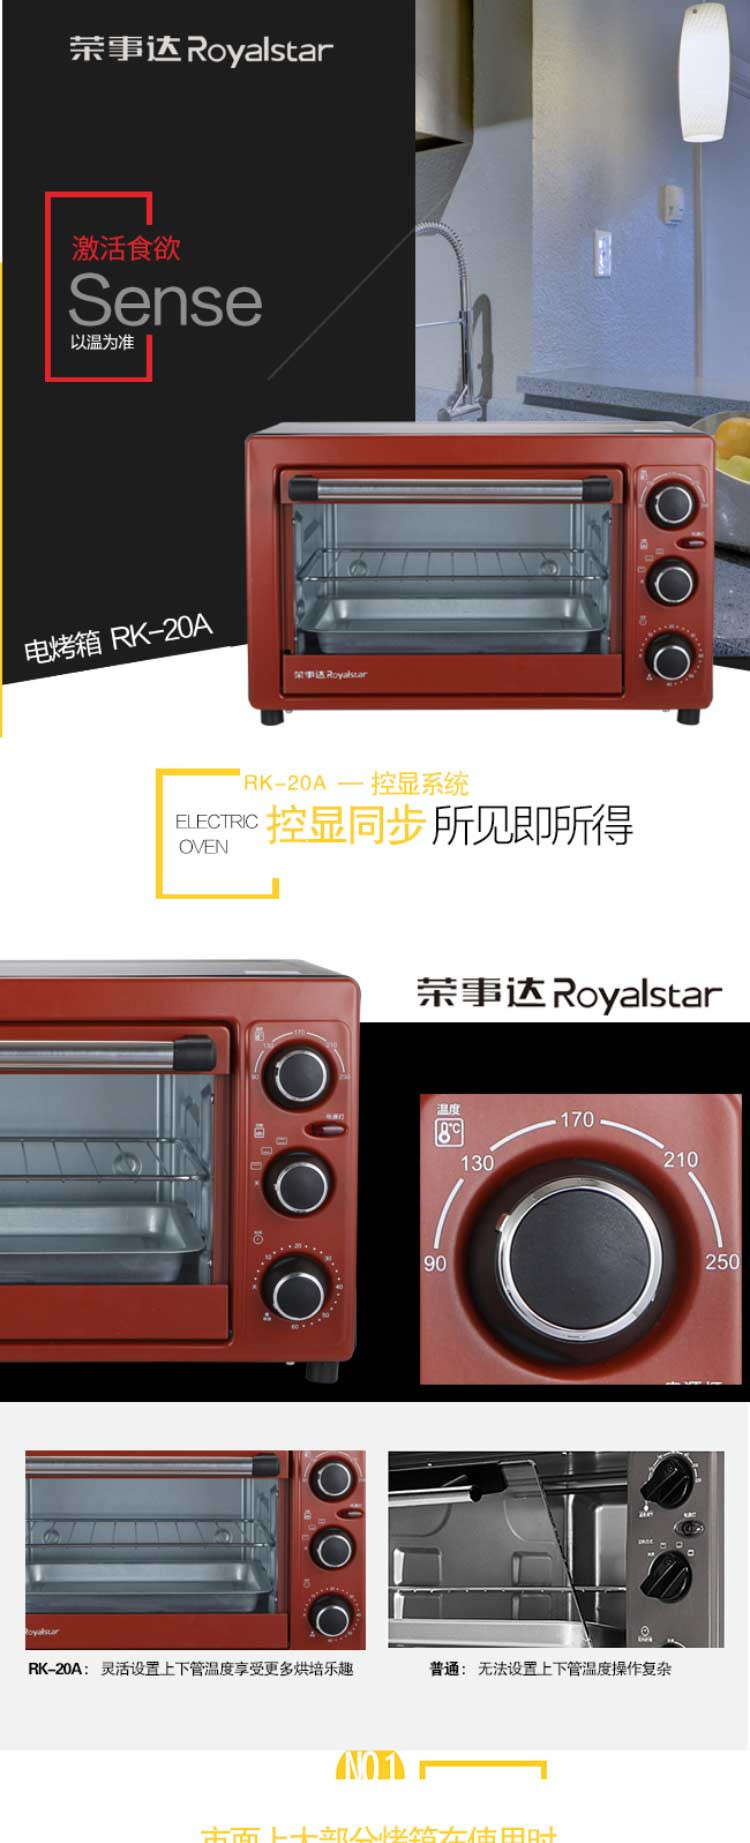 Royalstar 荣事达20.0L电烤箱 RK-20A